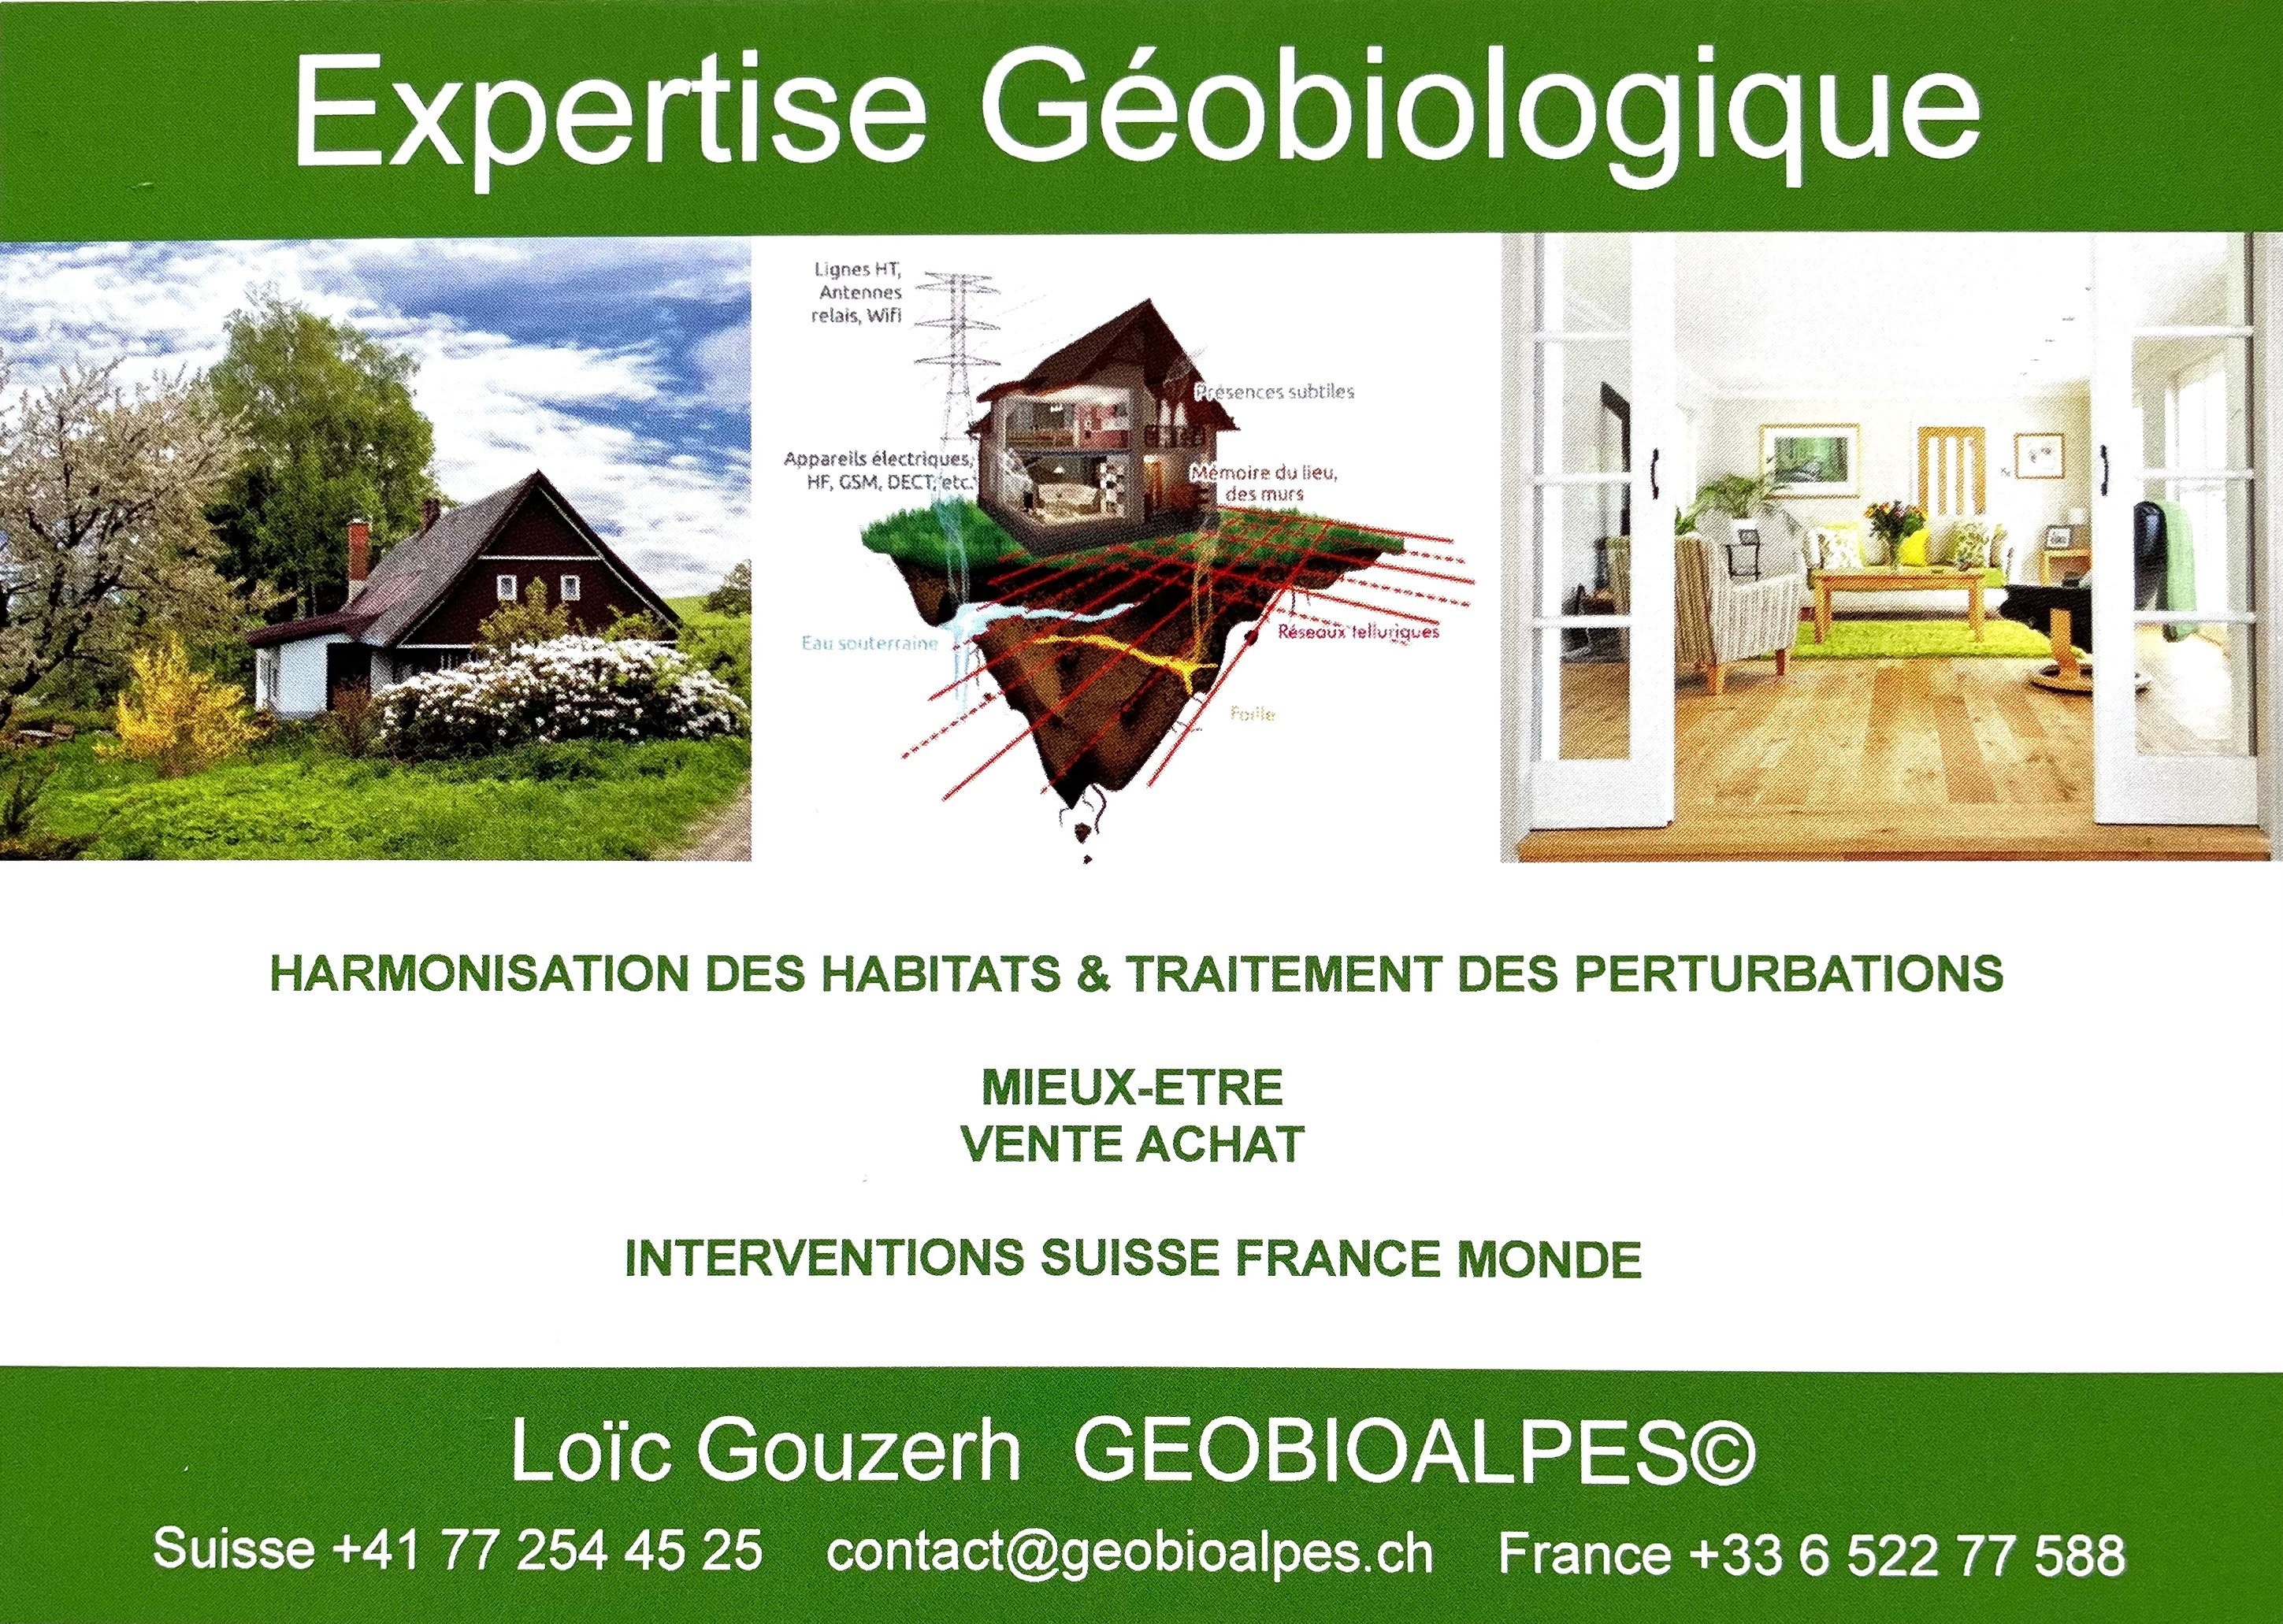 Expertise geobiologique en Suisse